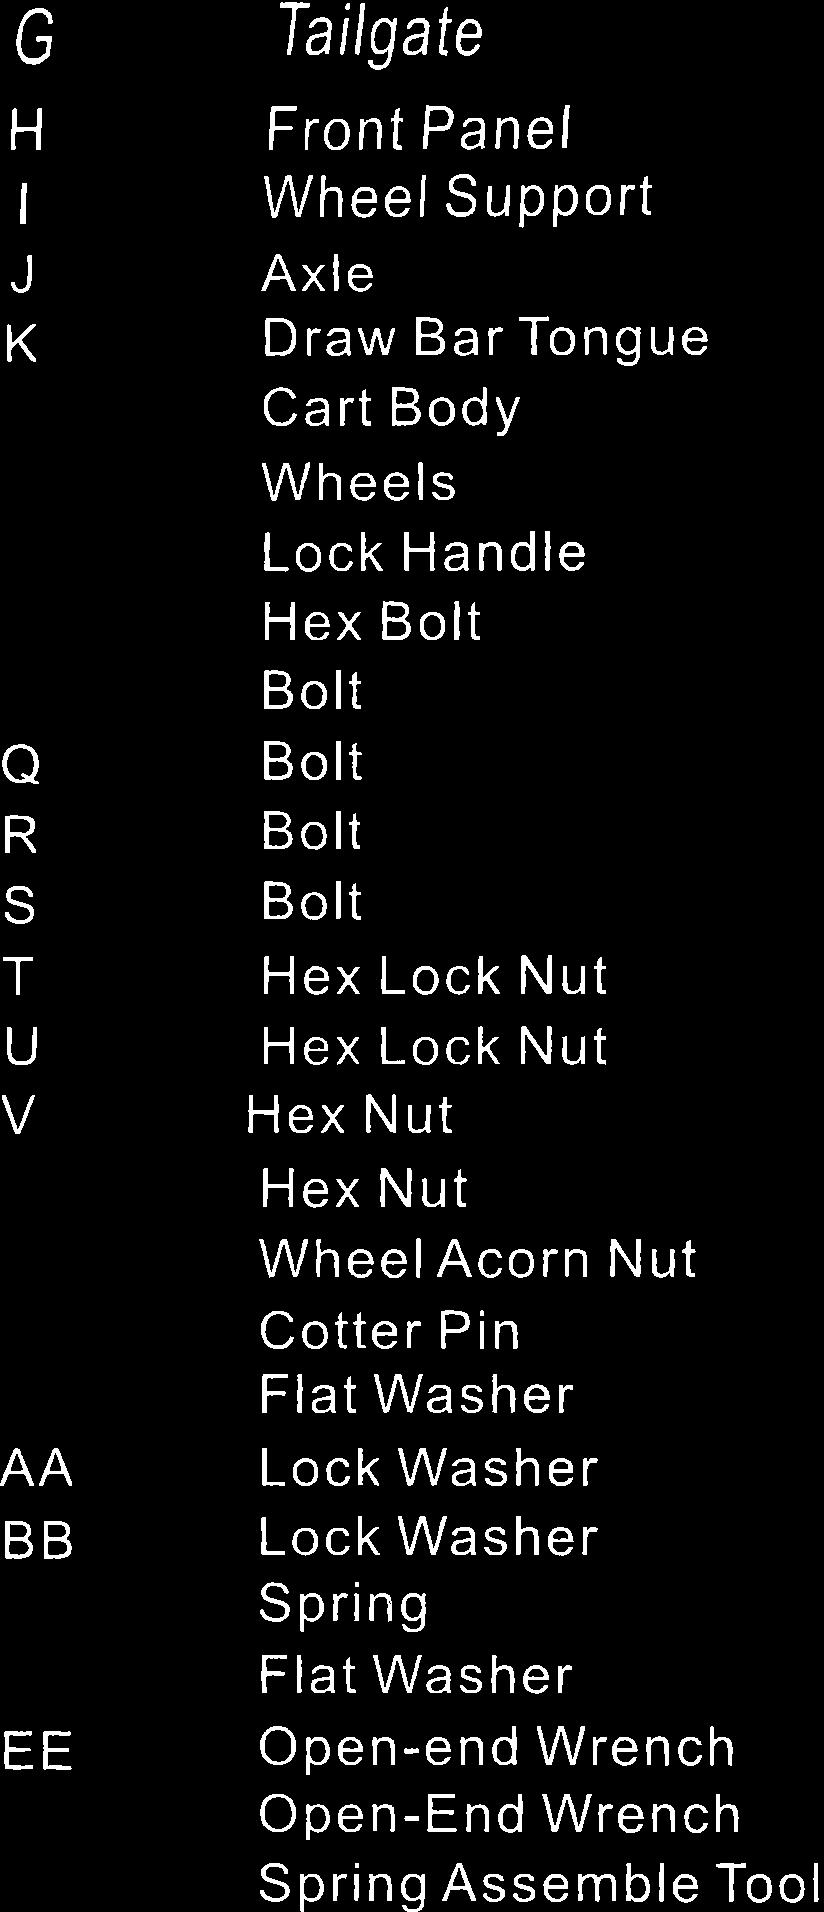 Hex Nut 8mm 2 W Hex Nut 10 mm 1 X Wheel Acorn N ut 2 Y Cotter Pin 1 z Flat Washer 10 mm 2 AA Lock Washer 10 mm 2 BB Lock Washer 10